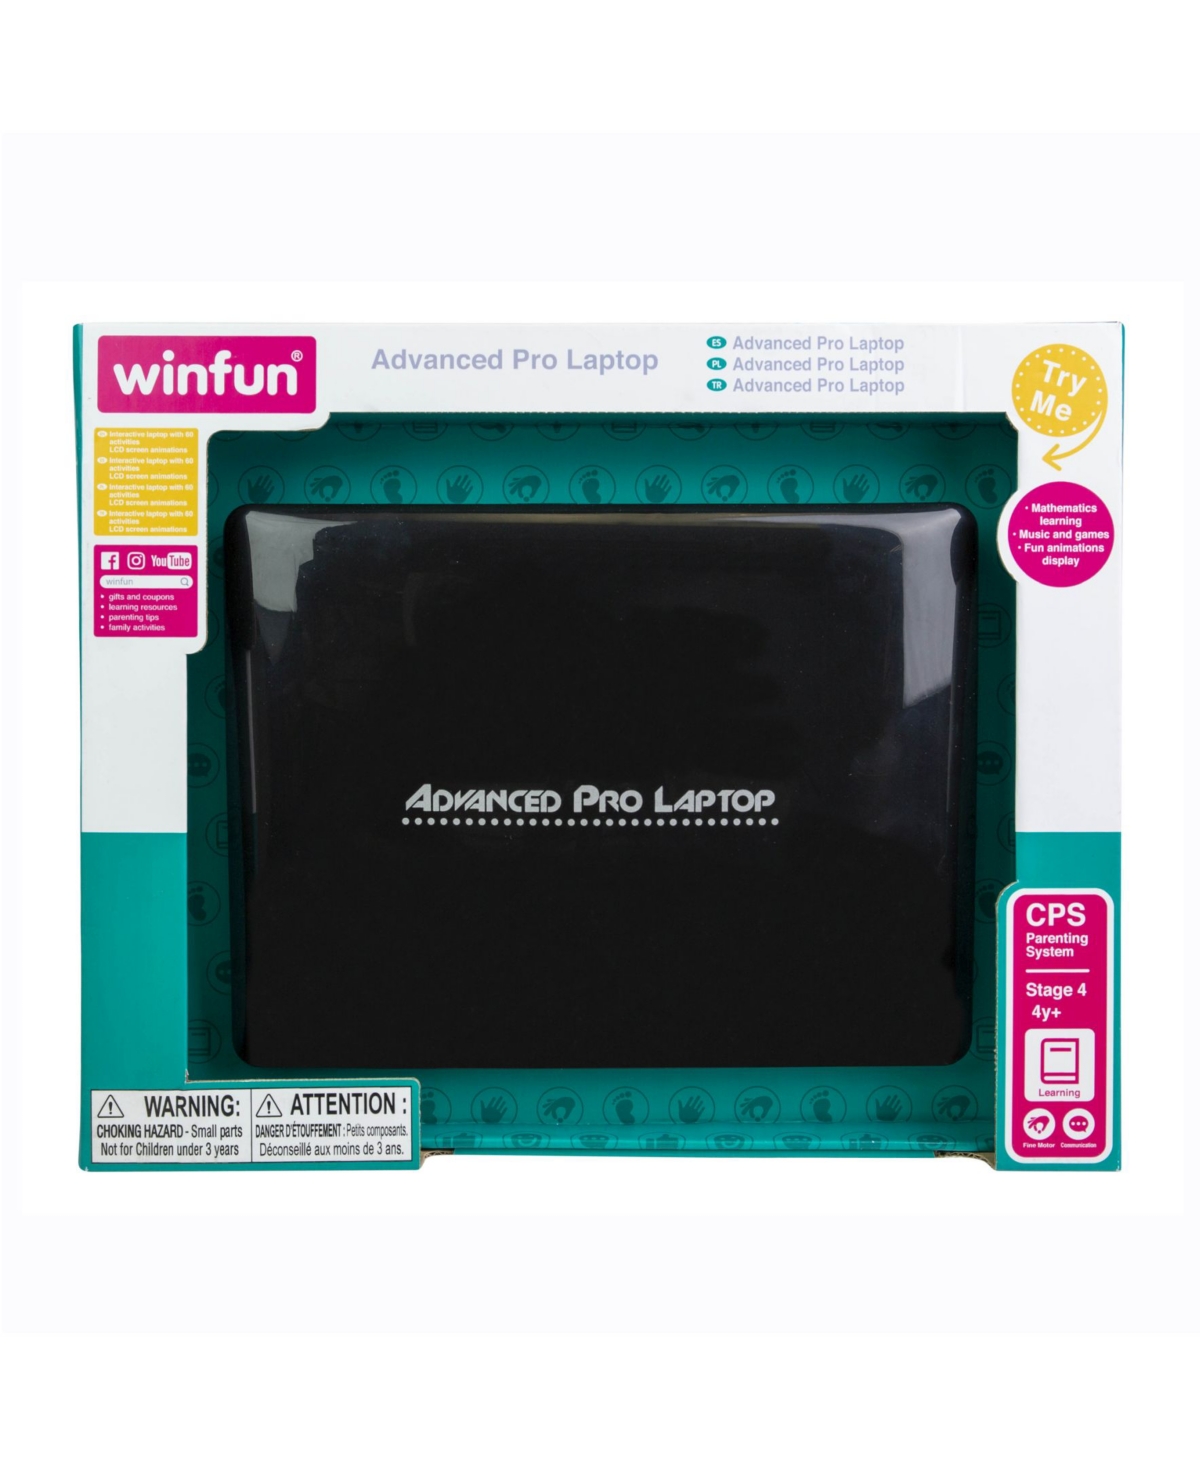 Winfun Advanced Pro Laptop Toy In Black